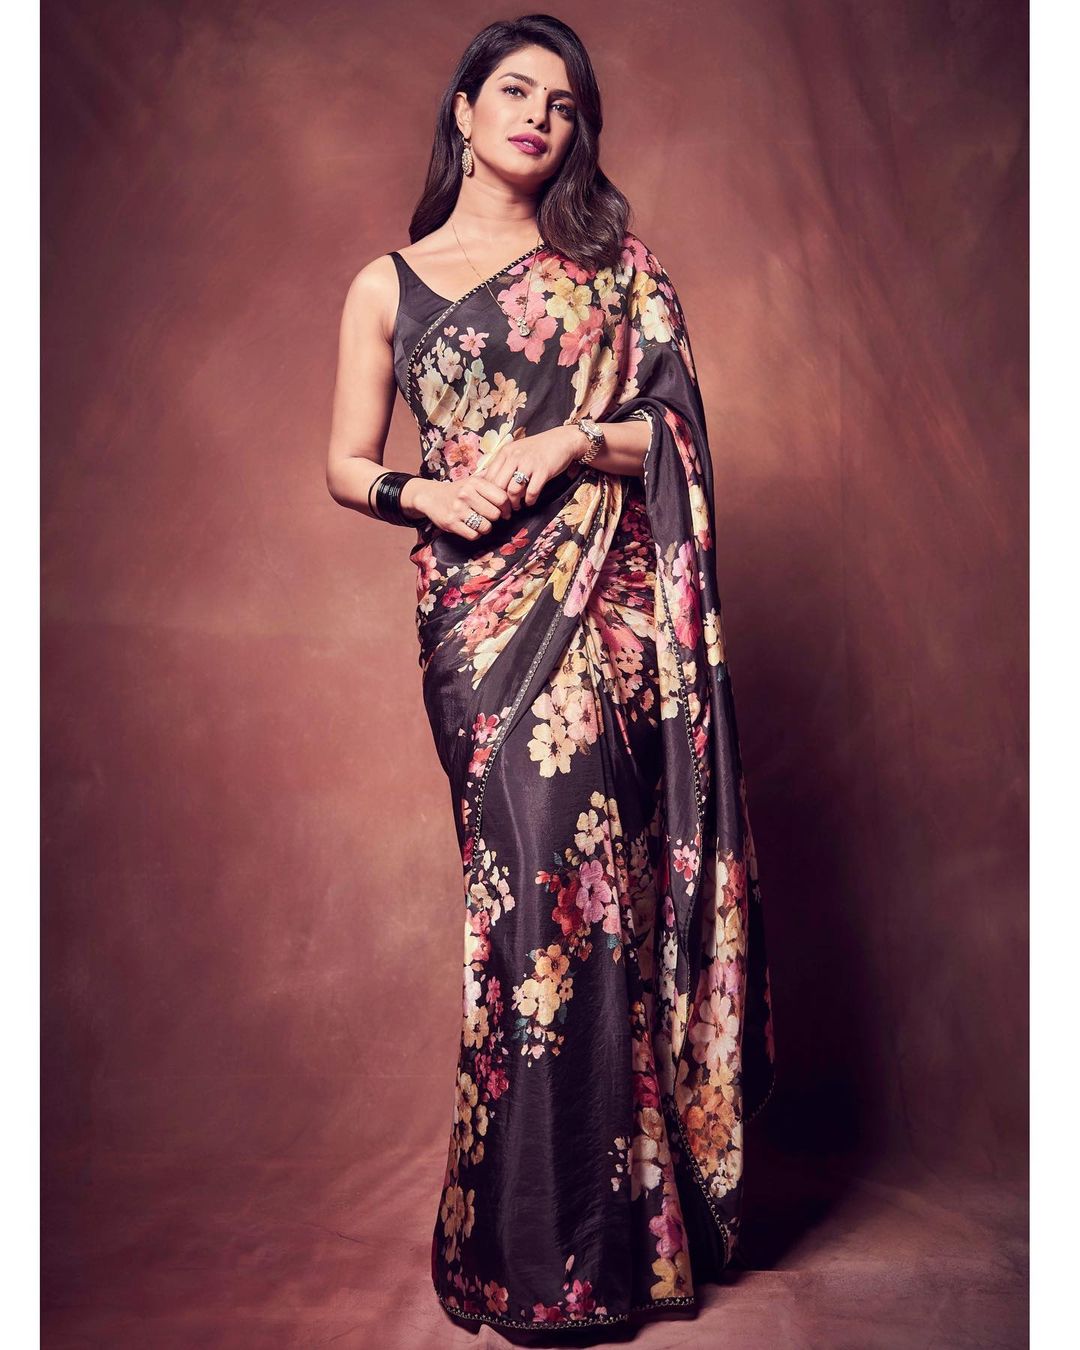 Priyanka Chopra looks spring ready in the floral-printed saree